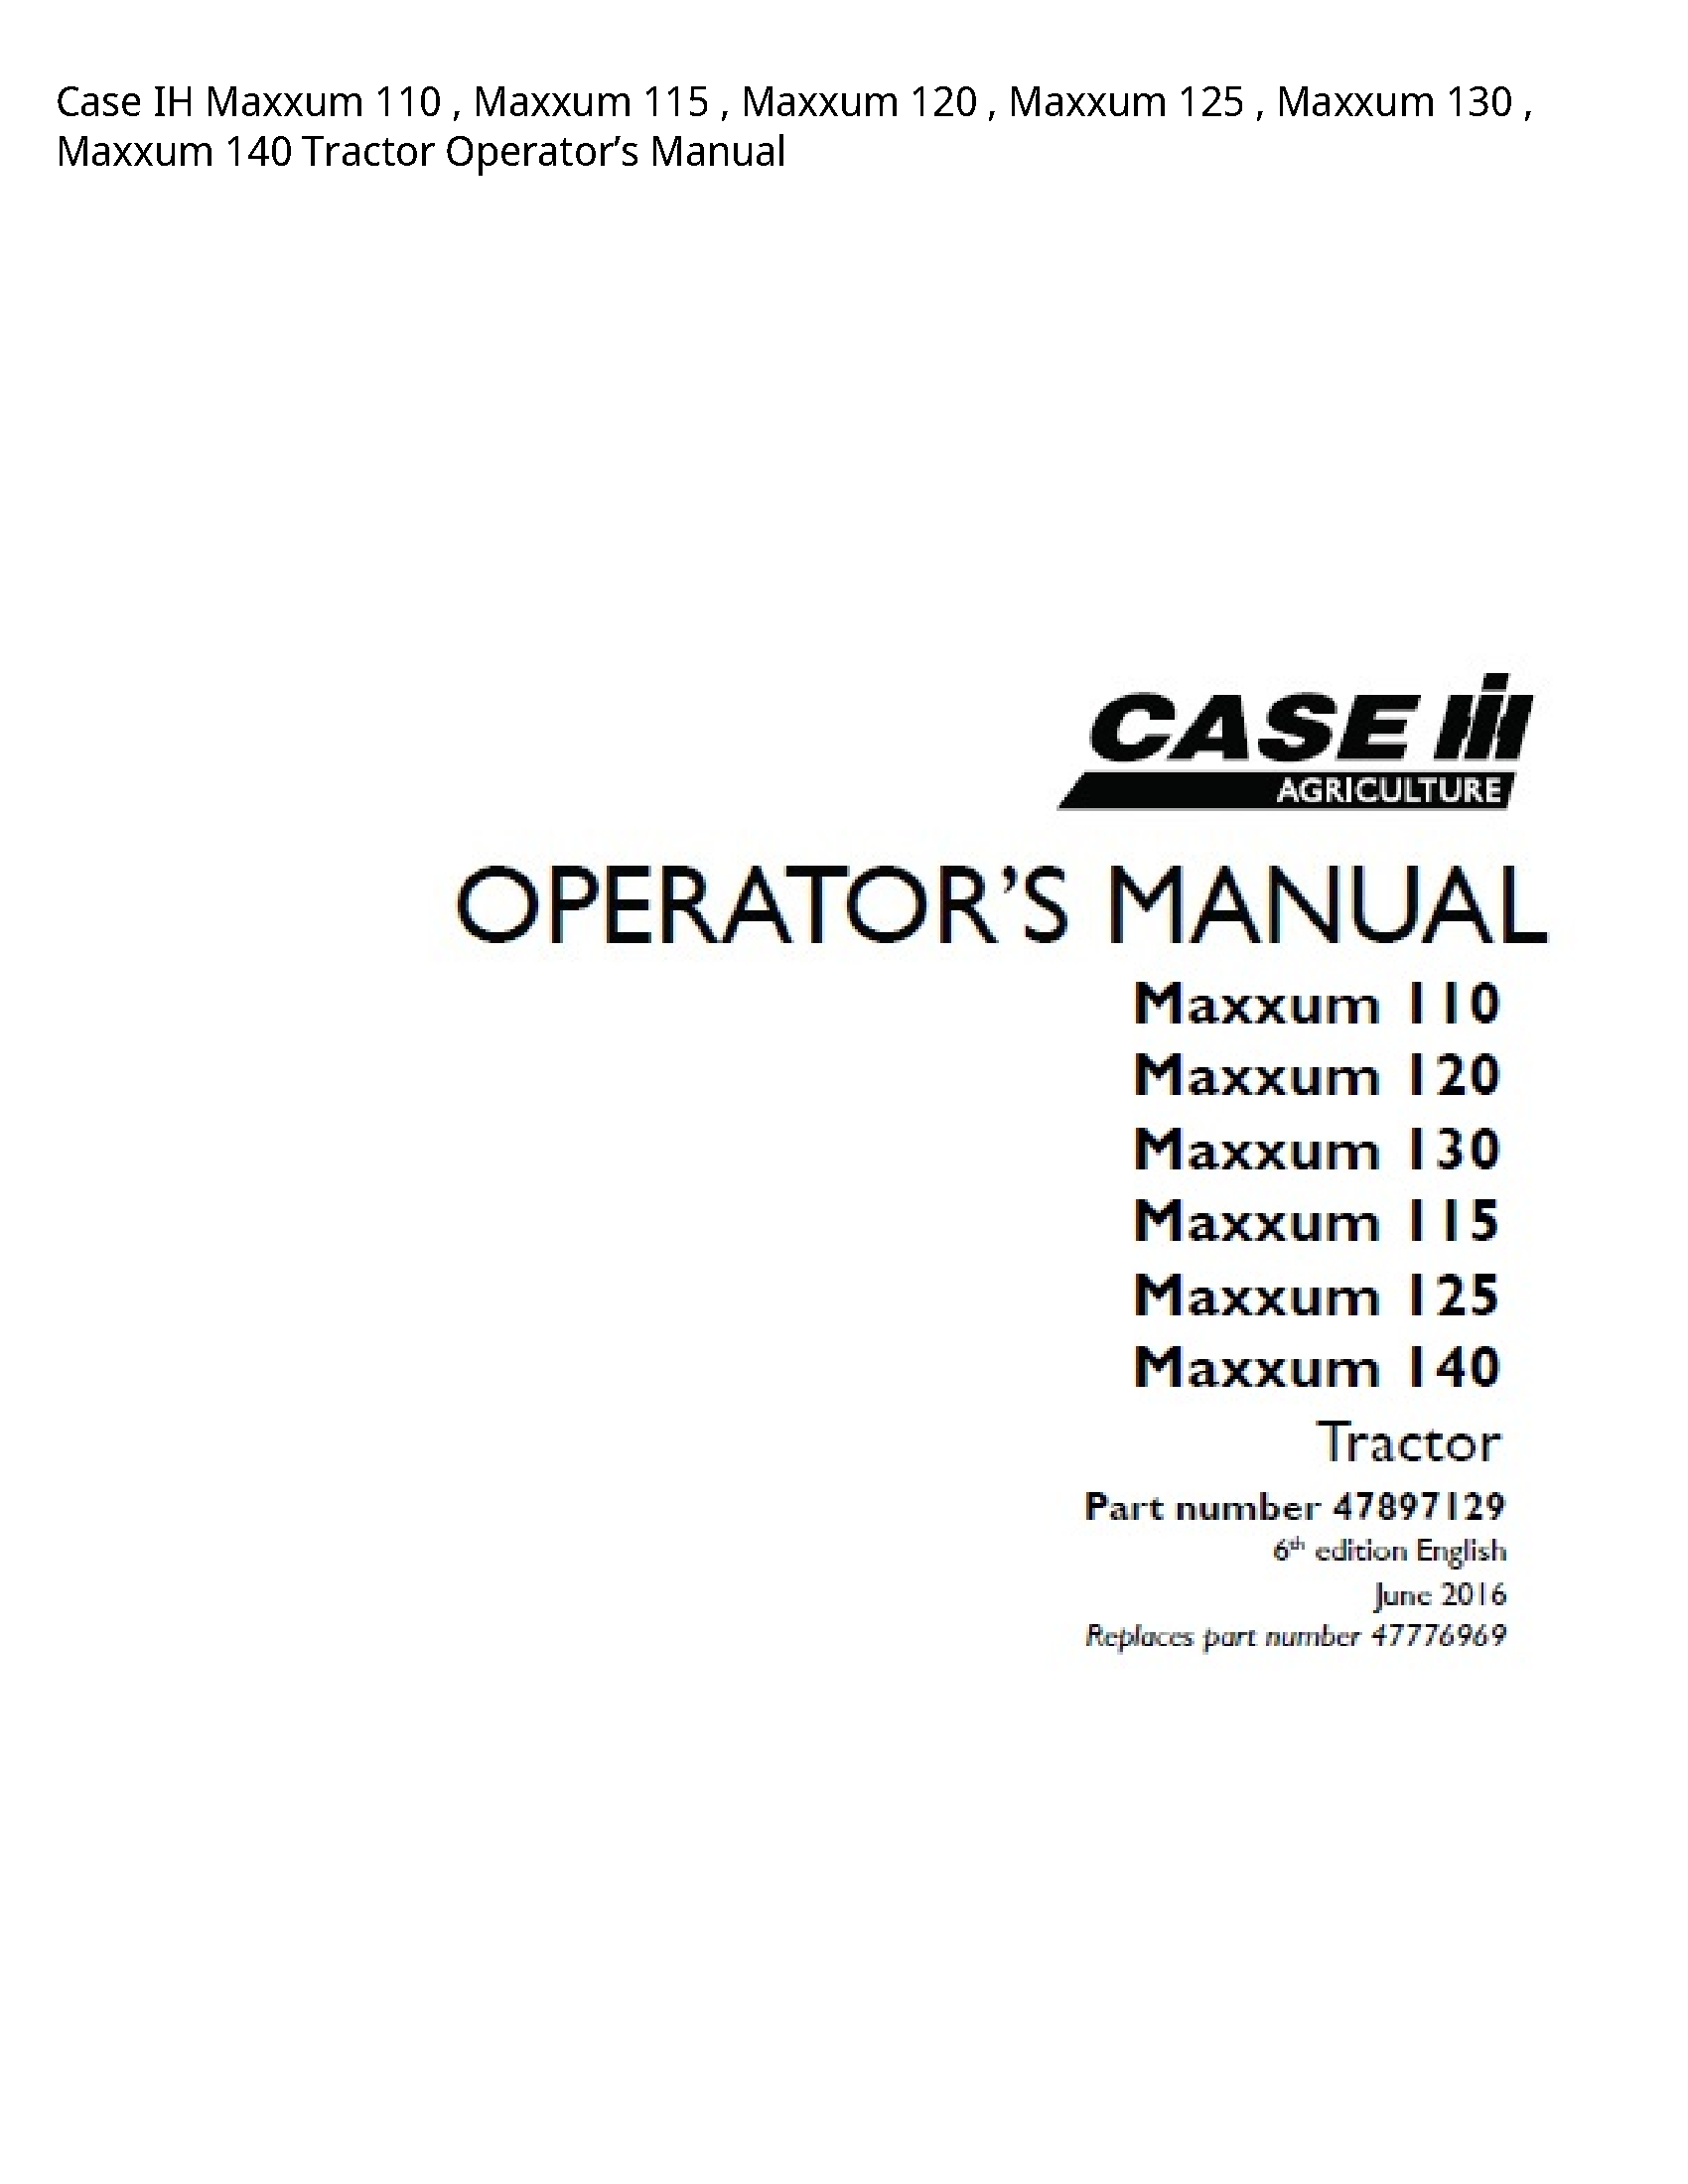 Case/Case IH 110 IH Maxxum Maxxum Maxxum Maxxum Maxxum Maxxum Tractor Operator’s manual